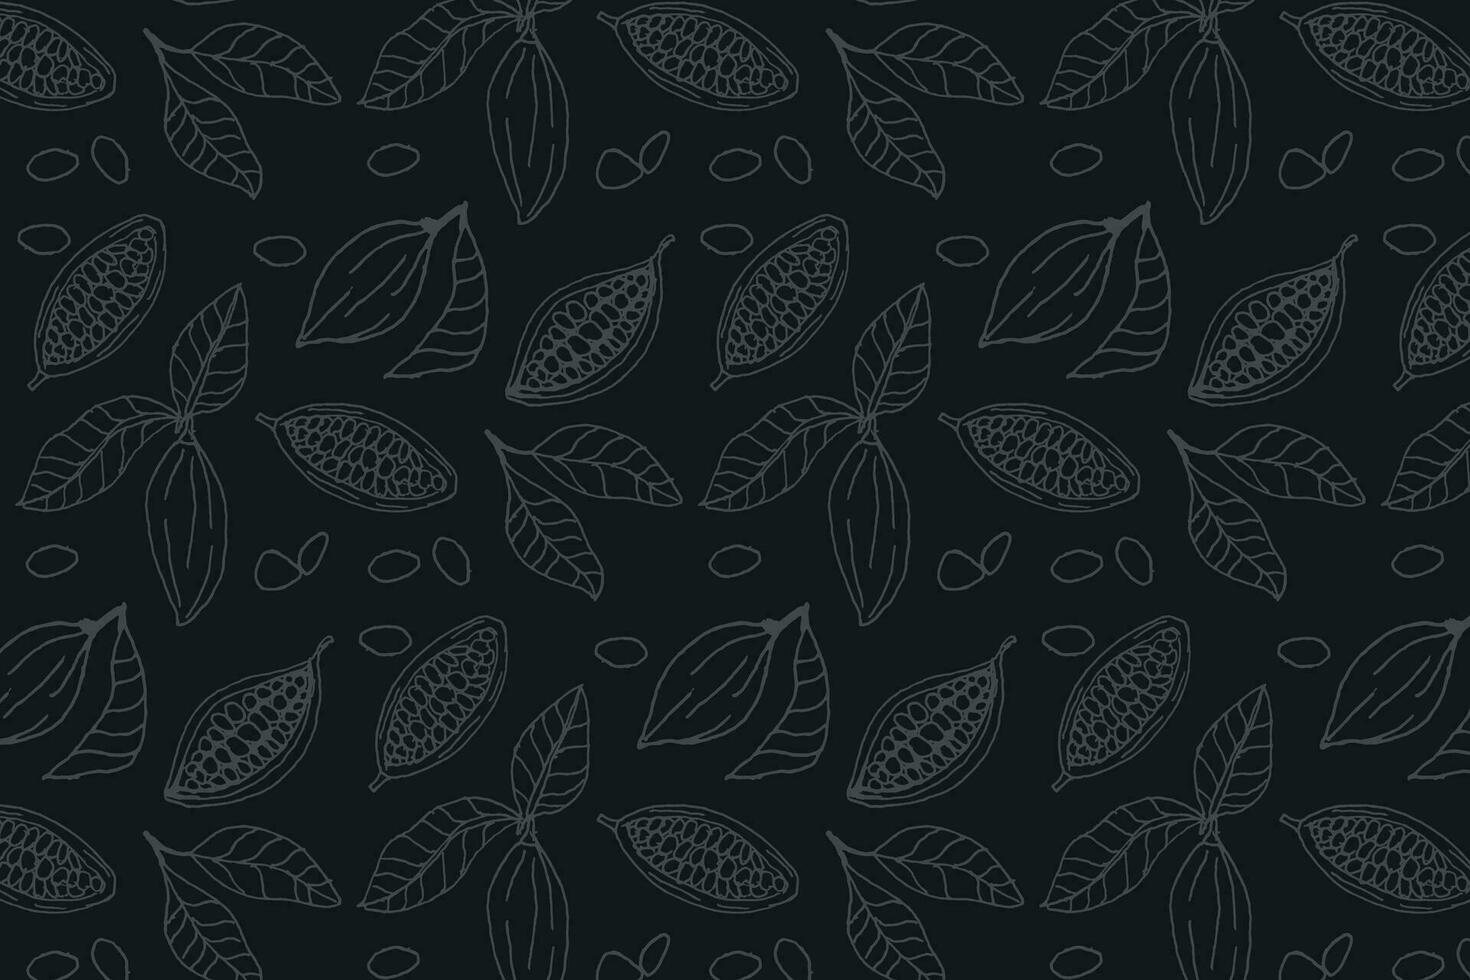 Kakao Bohnen und Kakao Blätter nahtlos Muster vektor